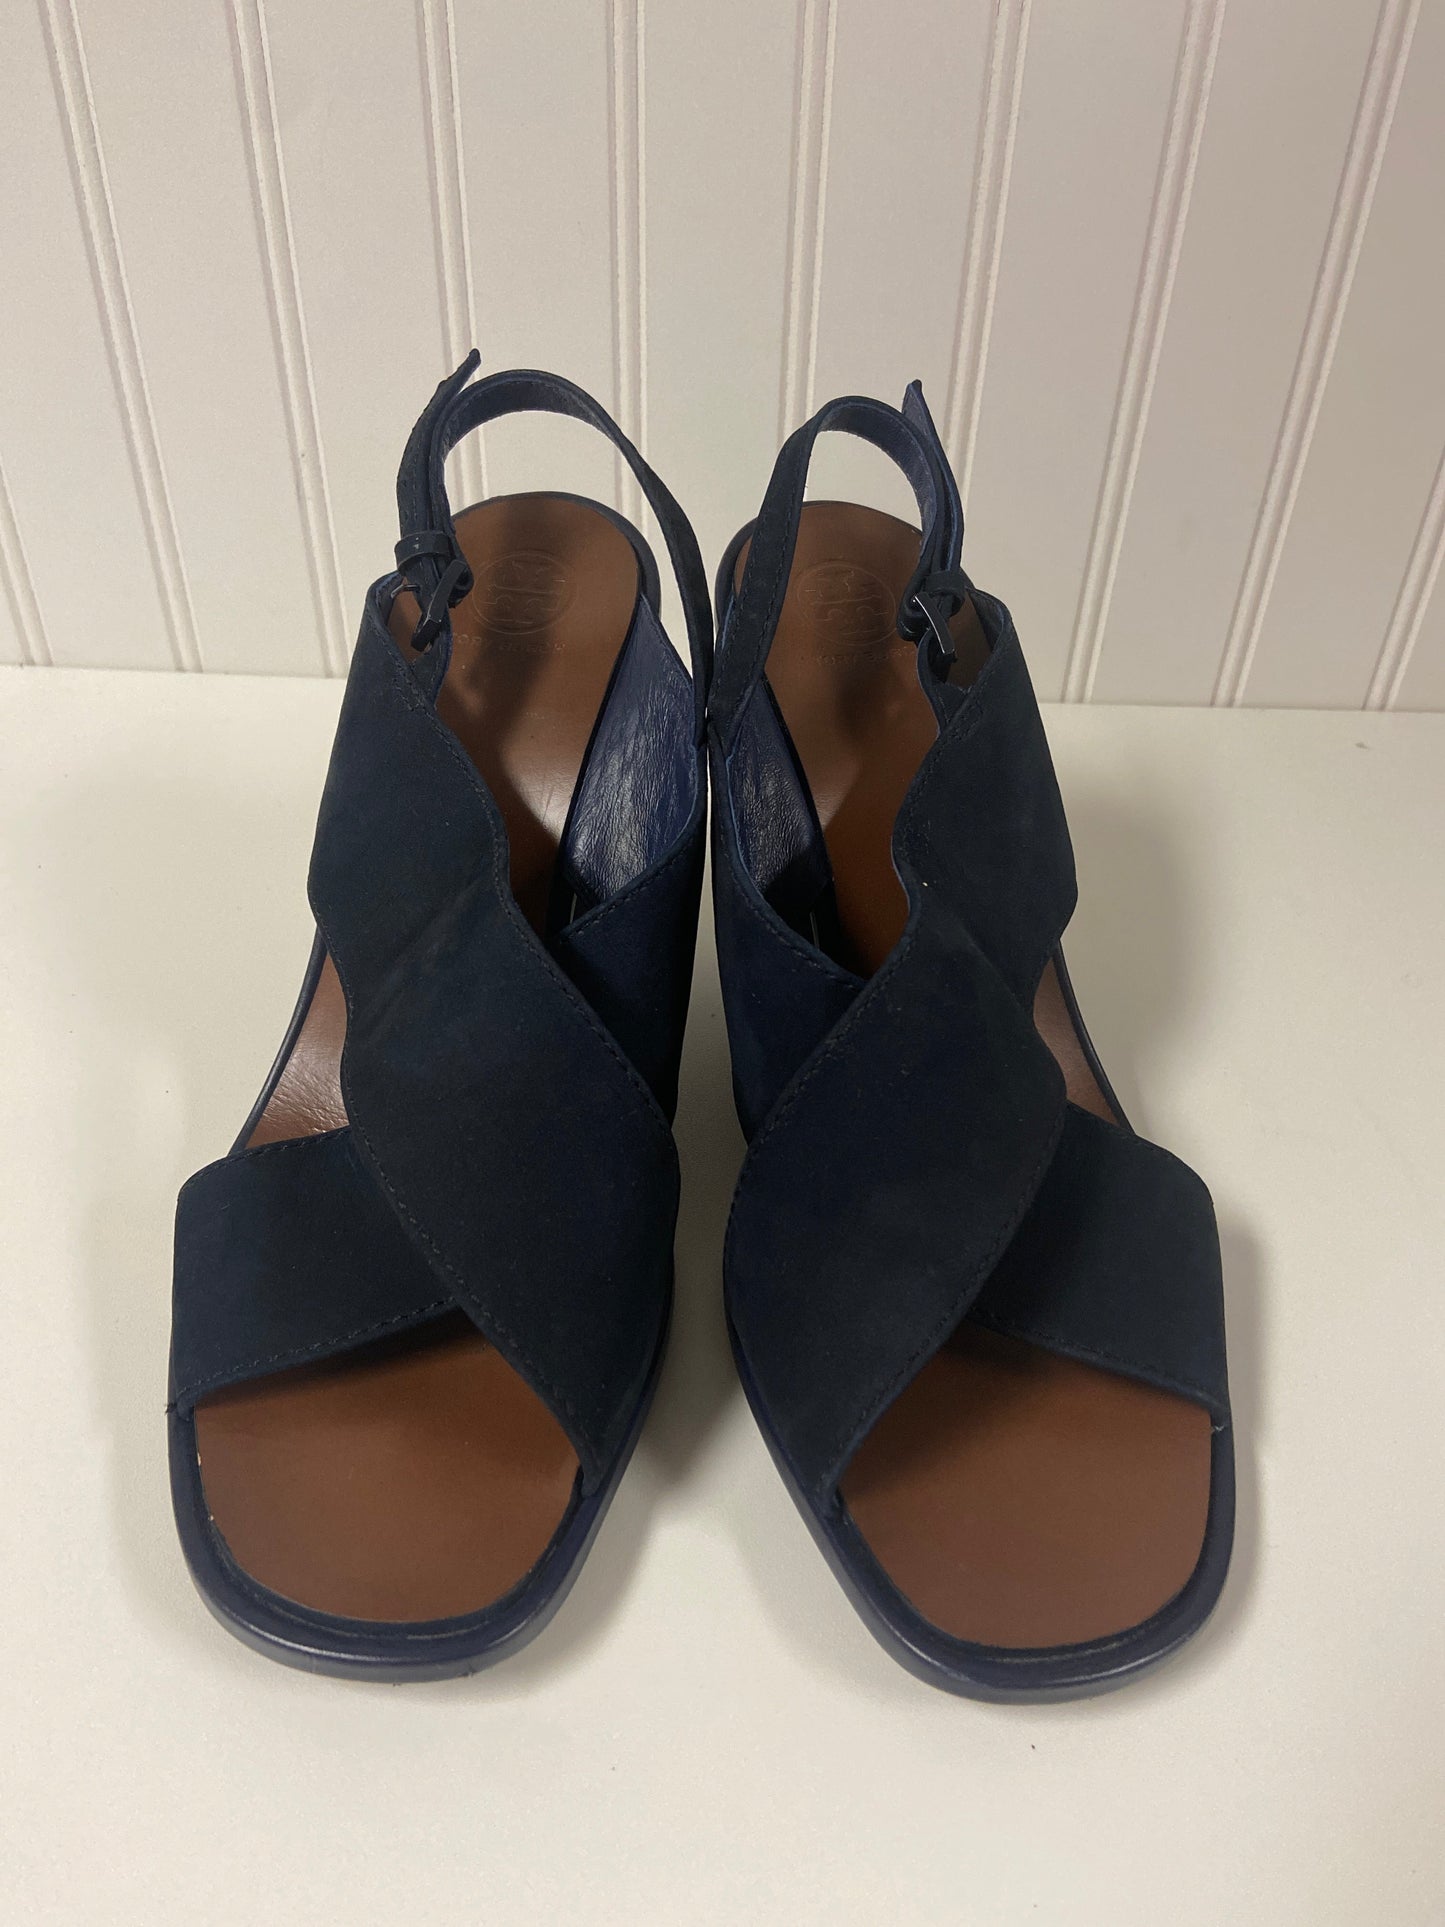 Navy Sandals Designer Tory Burch, Size 8.5